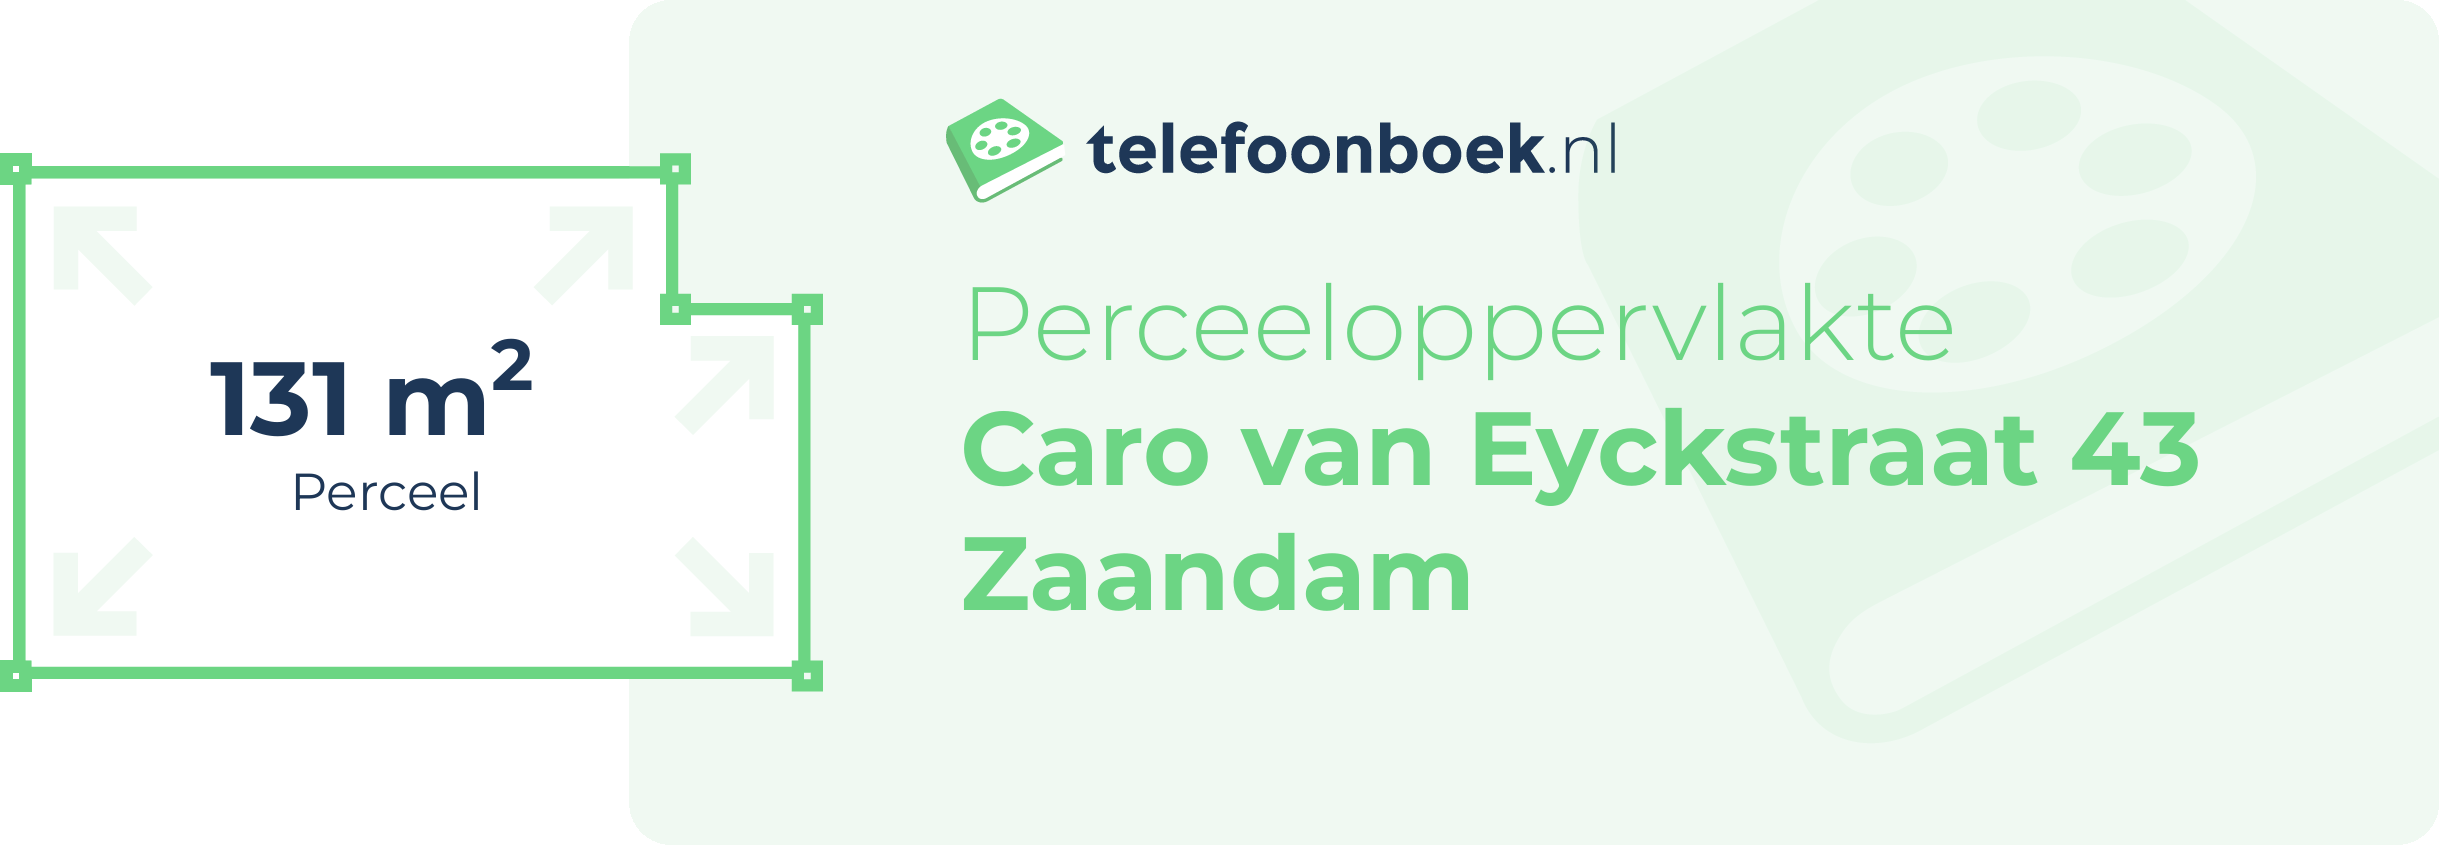 Perceeloppervlakte Caro Van Eyckstraat 43 Zaandam